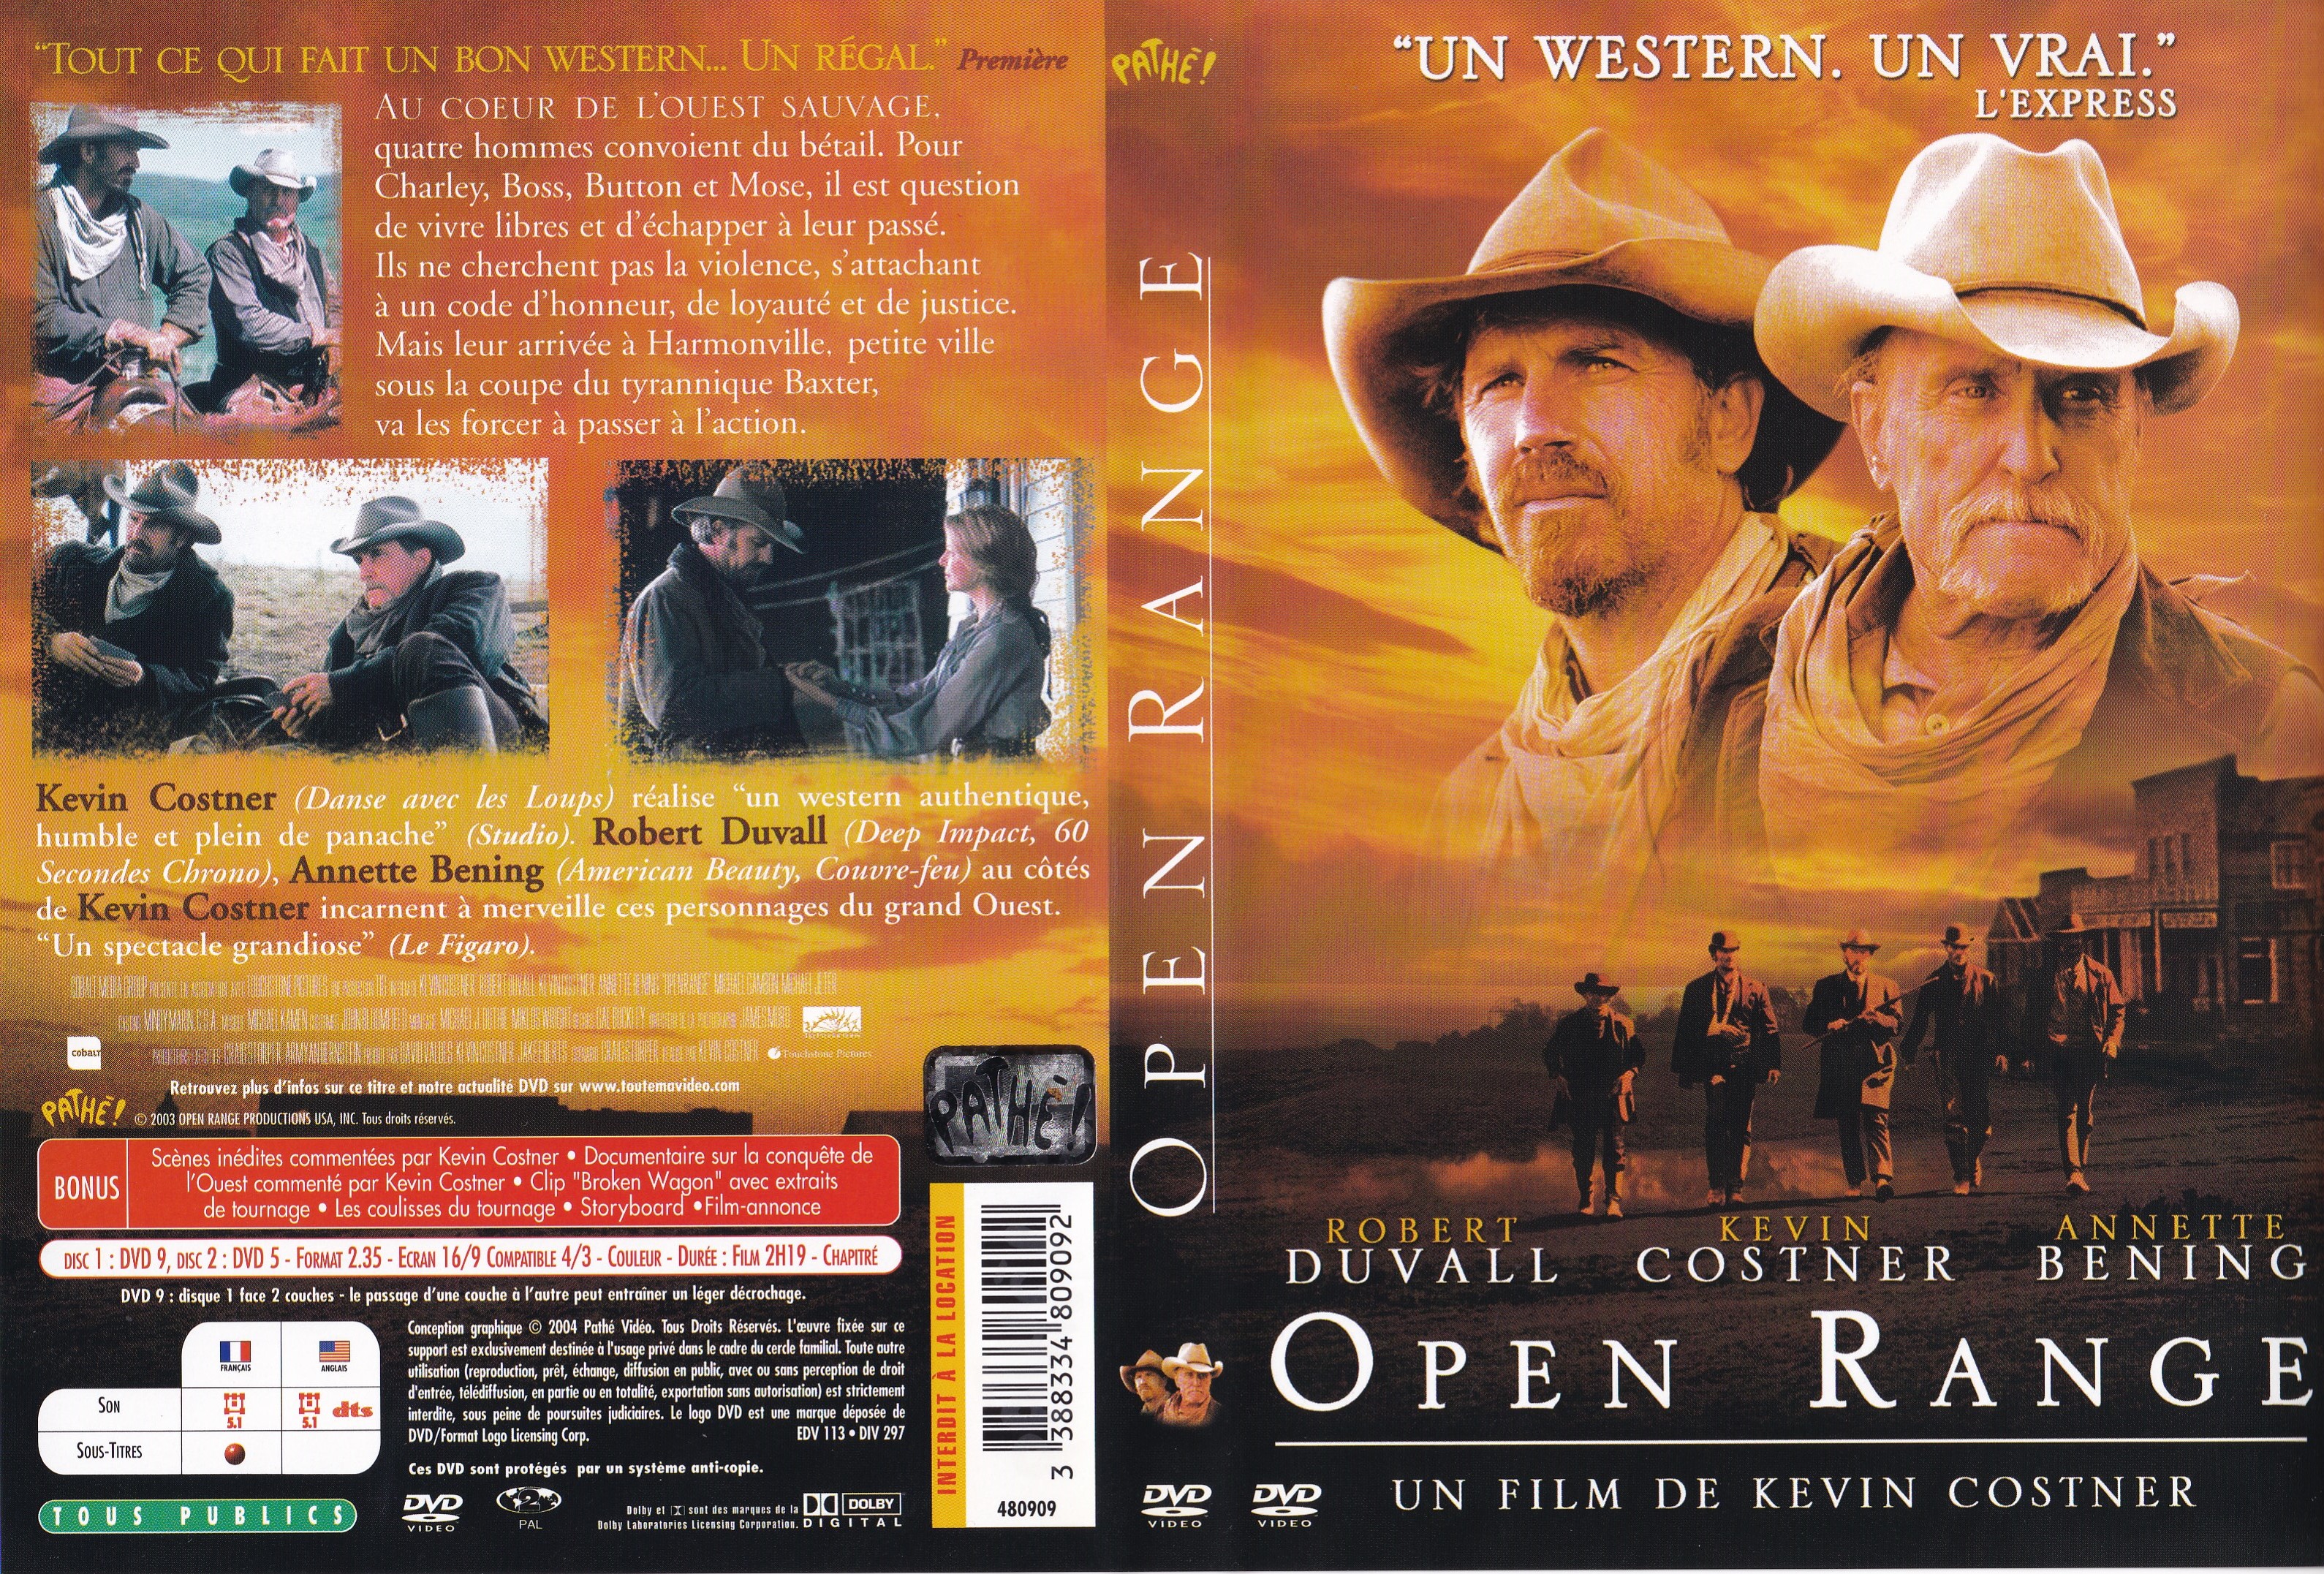 Jaquette DVD Open Range v2